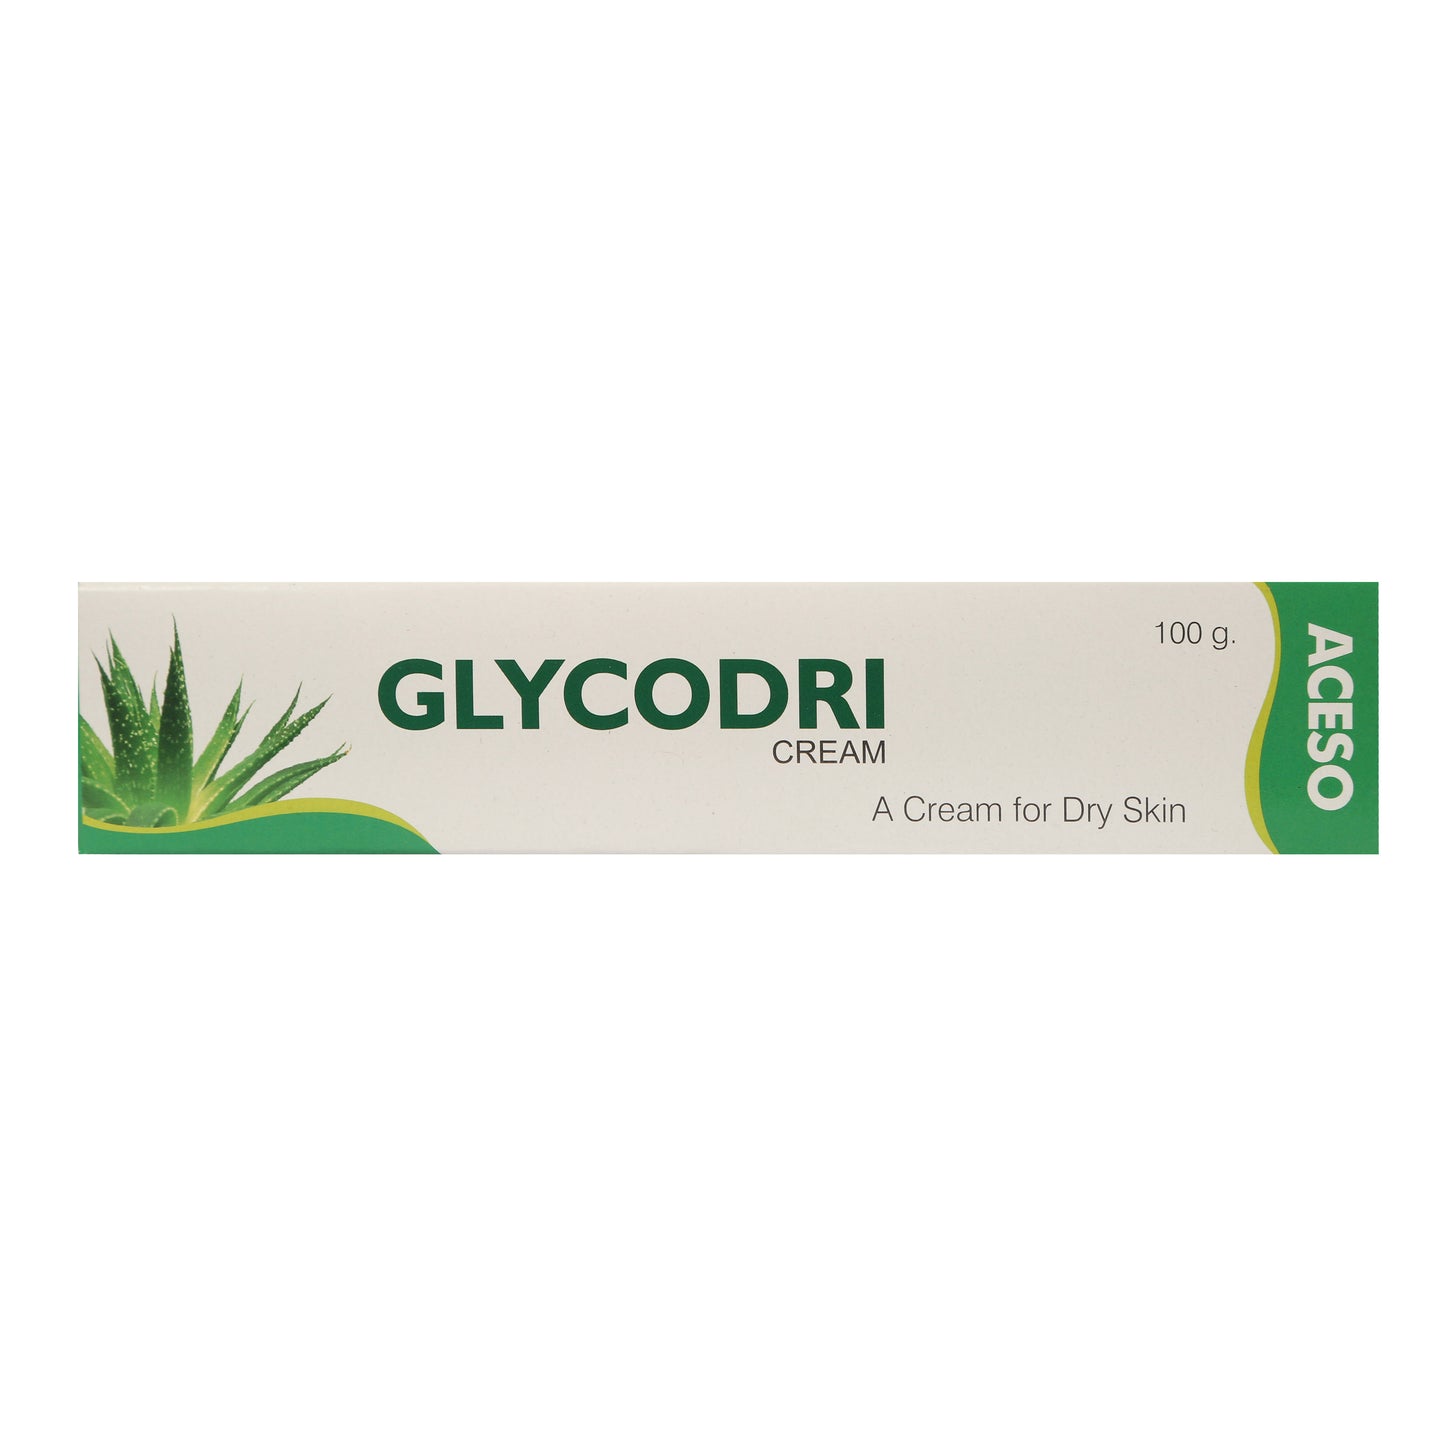 Glycodri